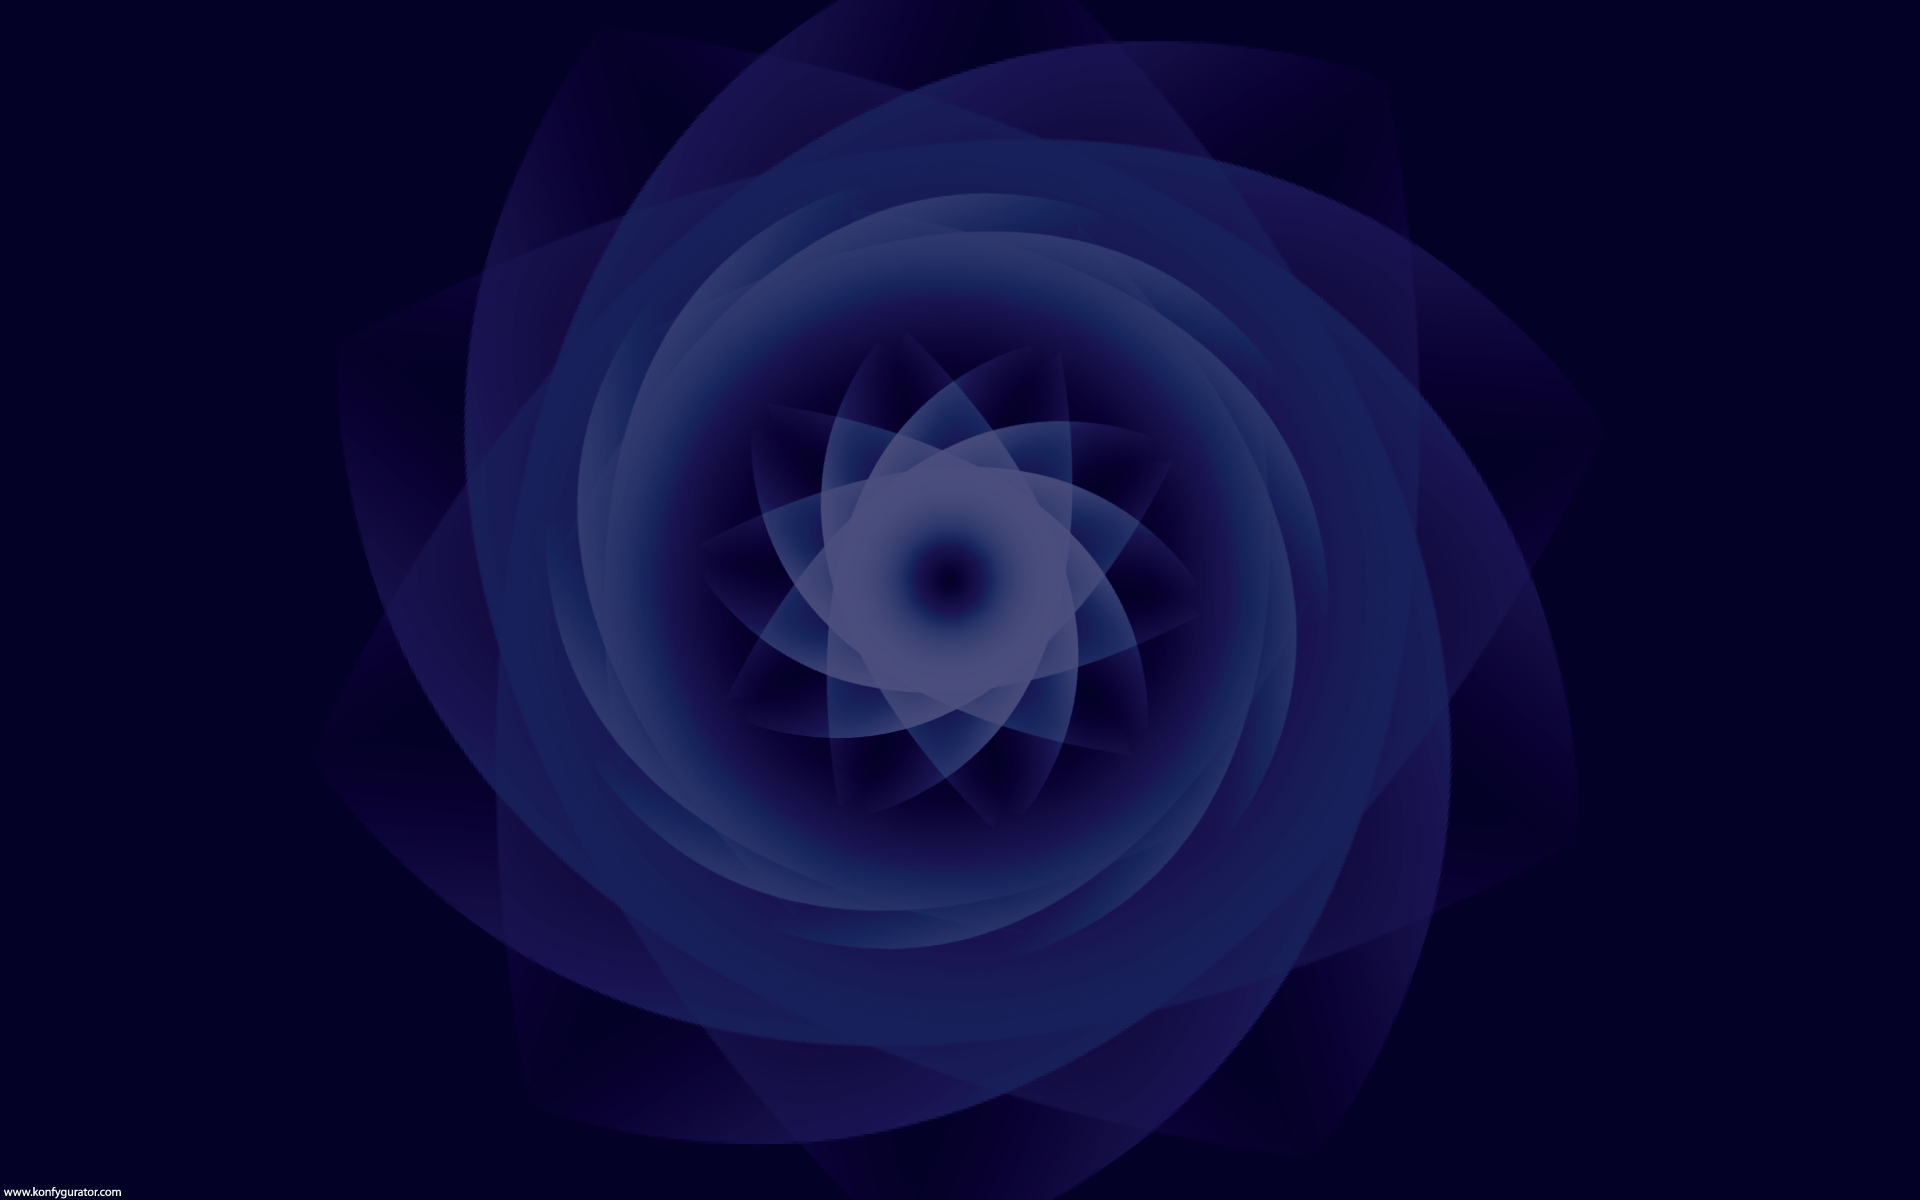 HD Wallpapers - 3D & Abstract - flower, blue, spiral